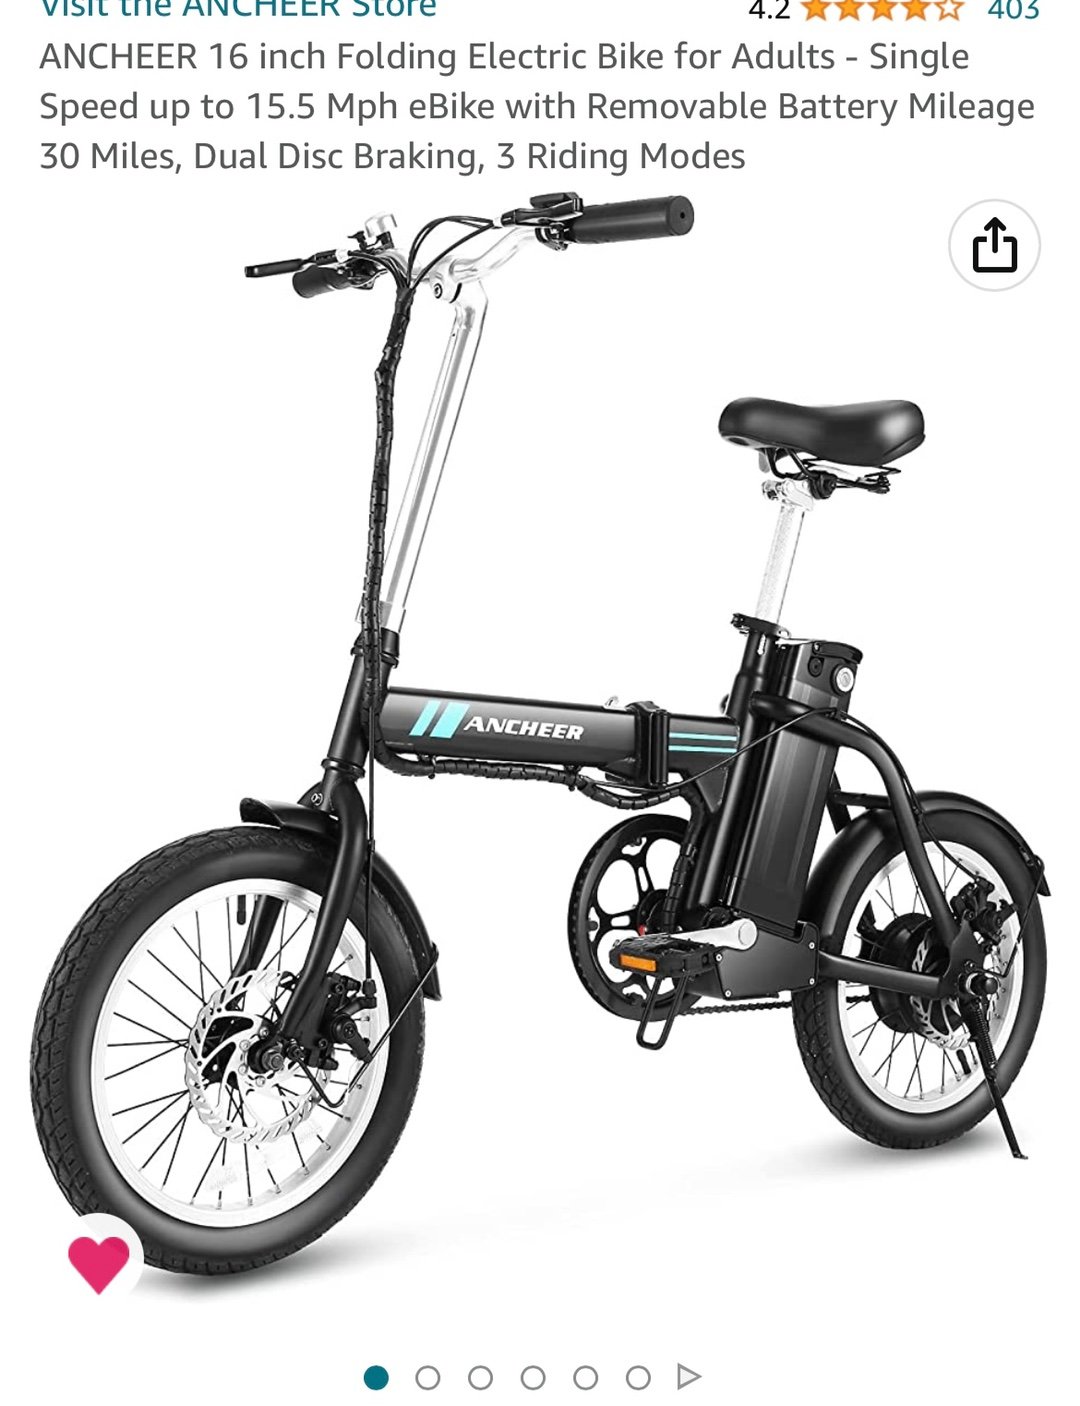 Amazon买什么——电动自行车及配件。。。